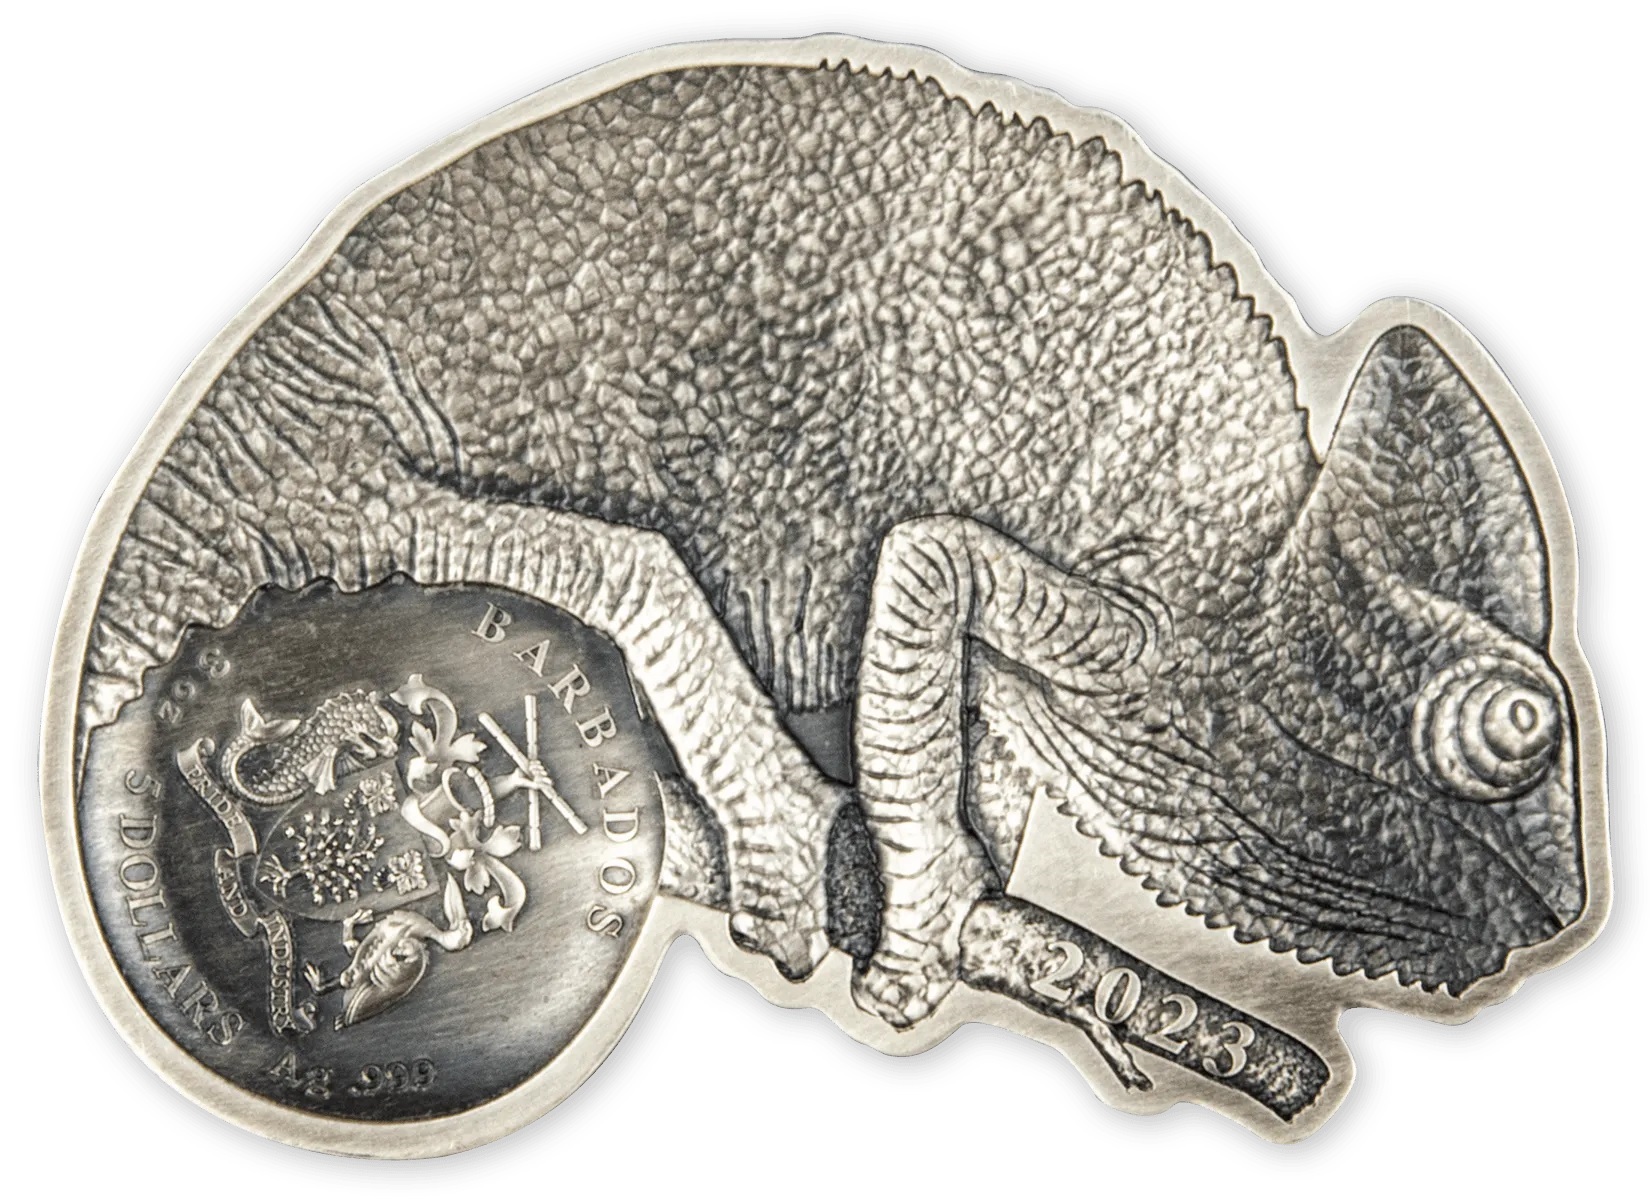 (W022.5.D.2023.3.oz.Ag.3) 5 Dollars Barbados 2023 3 oz Antique silver - The Chameleon Obverse (zoom)